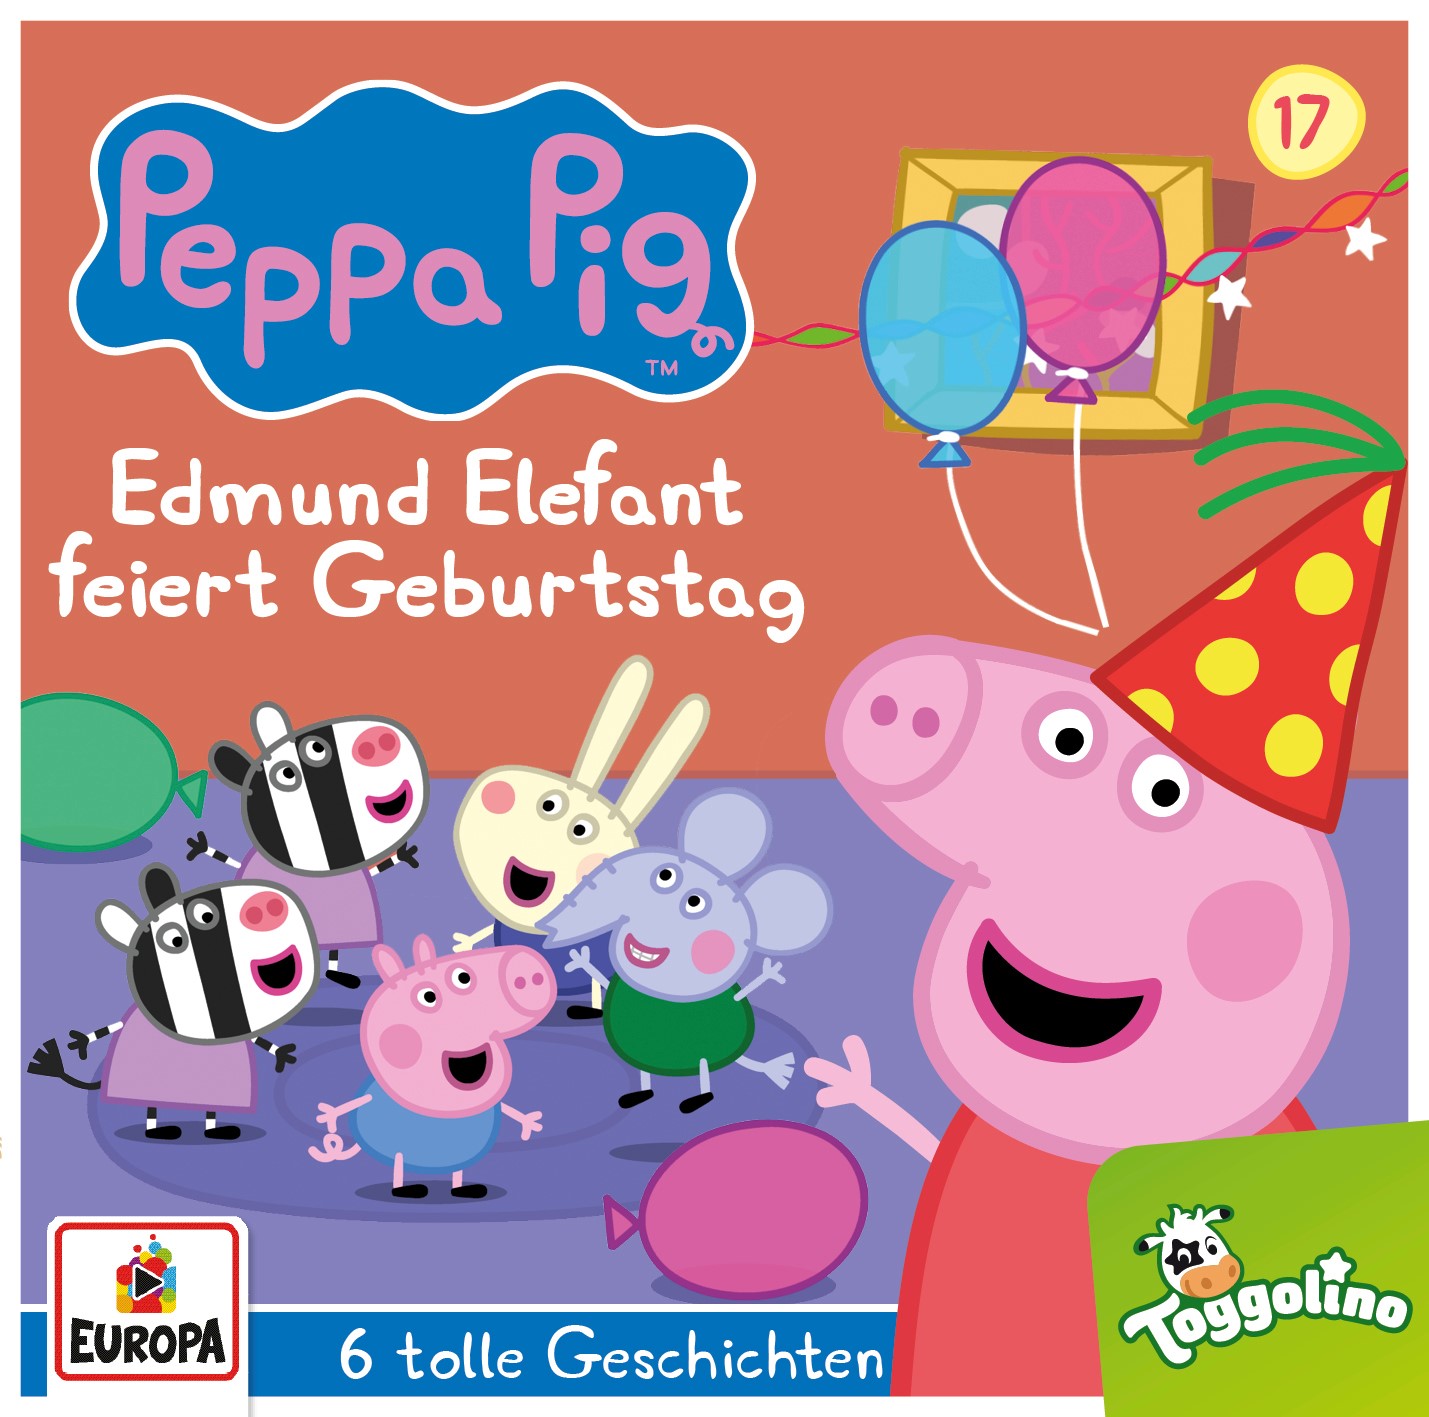 Peppa Pig Hörspiele - Edmund Elefant feiert Geburtstag